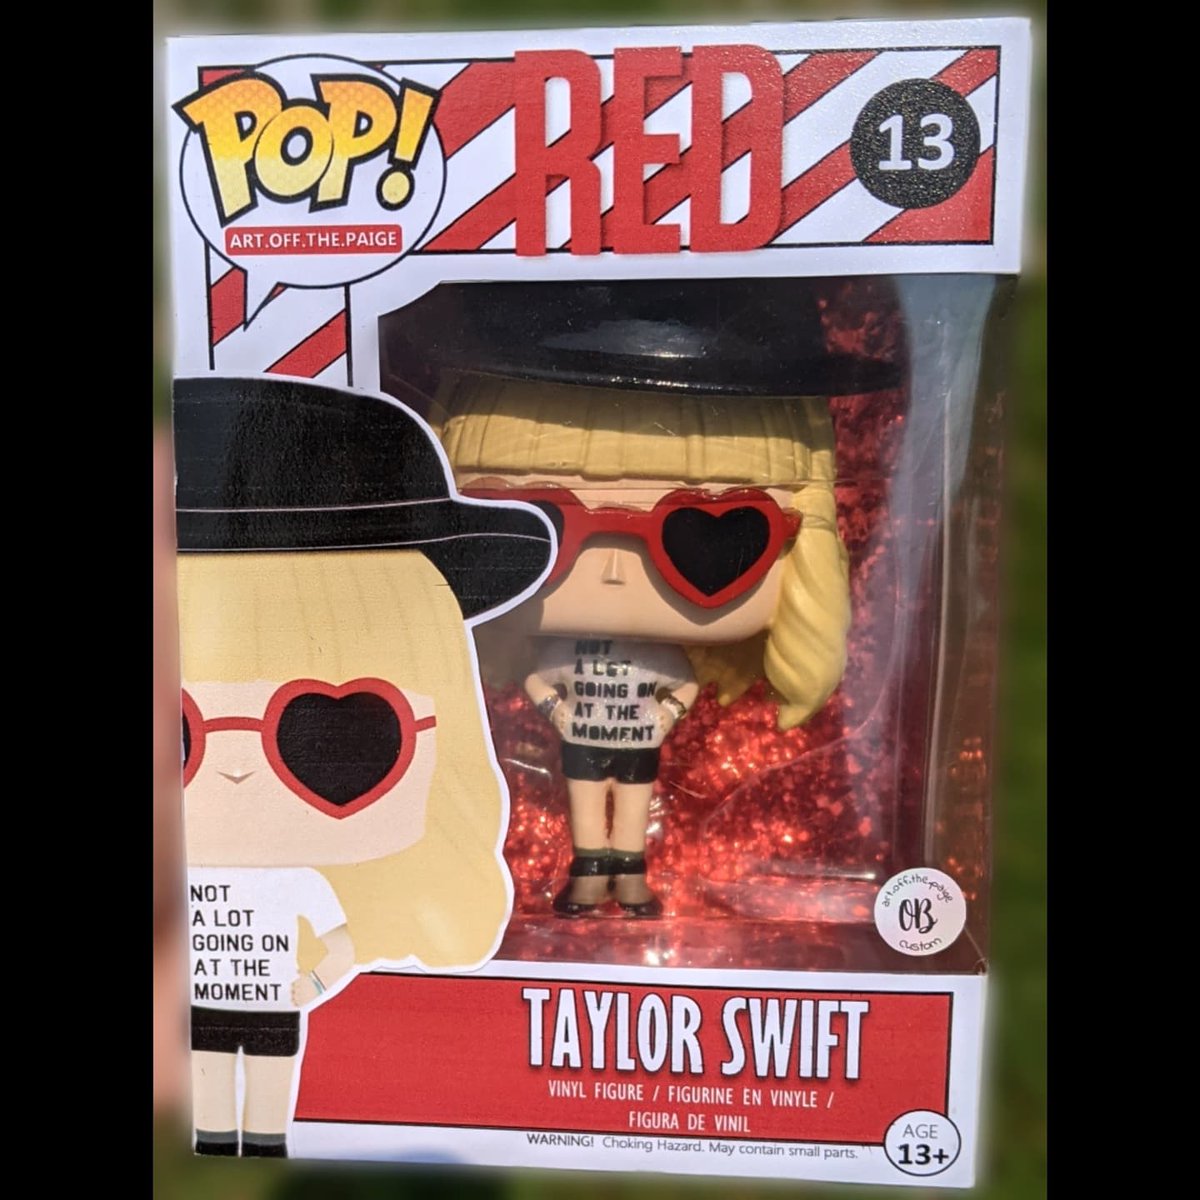 art.off.the.paige / Olivia on X: Taylor Swift 1989 Custom Funko Pop! 🕶️ # taylor #swift #taylorswift #swiftie #swifties #taylornation #folklore  #reputation #newyork #ny #glitter #sparkle #art #artist #custom  #customfunkopop #funko #funkopop #fearless